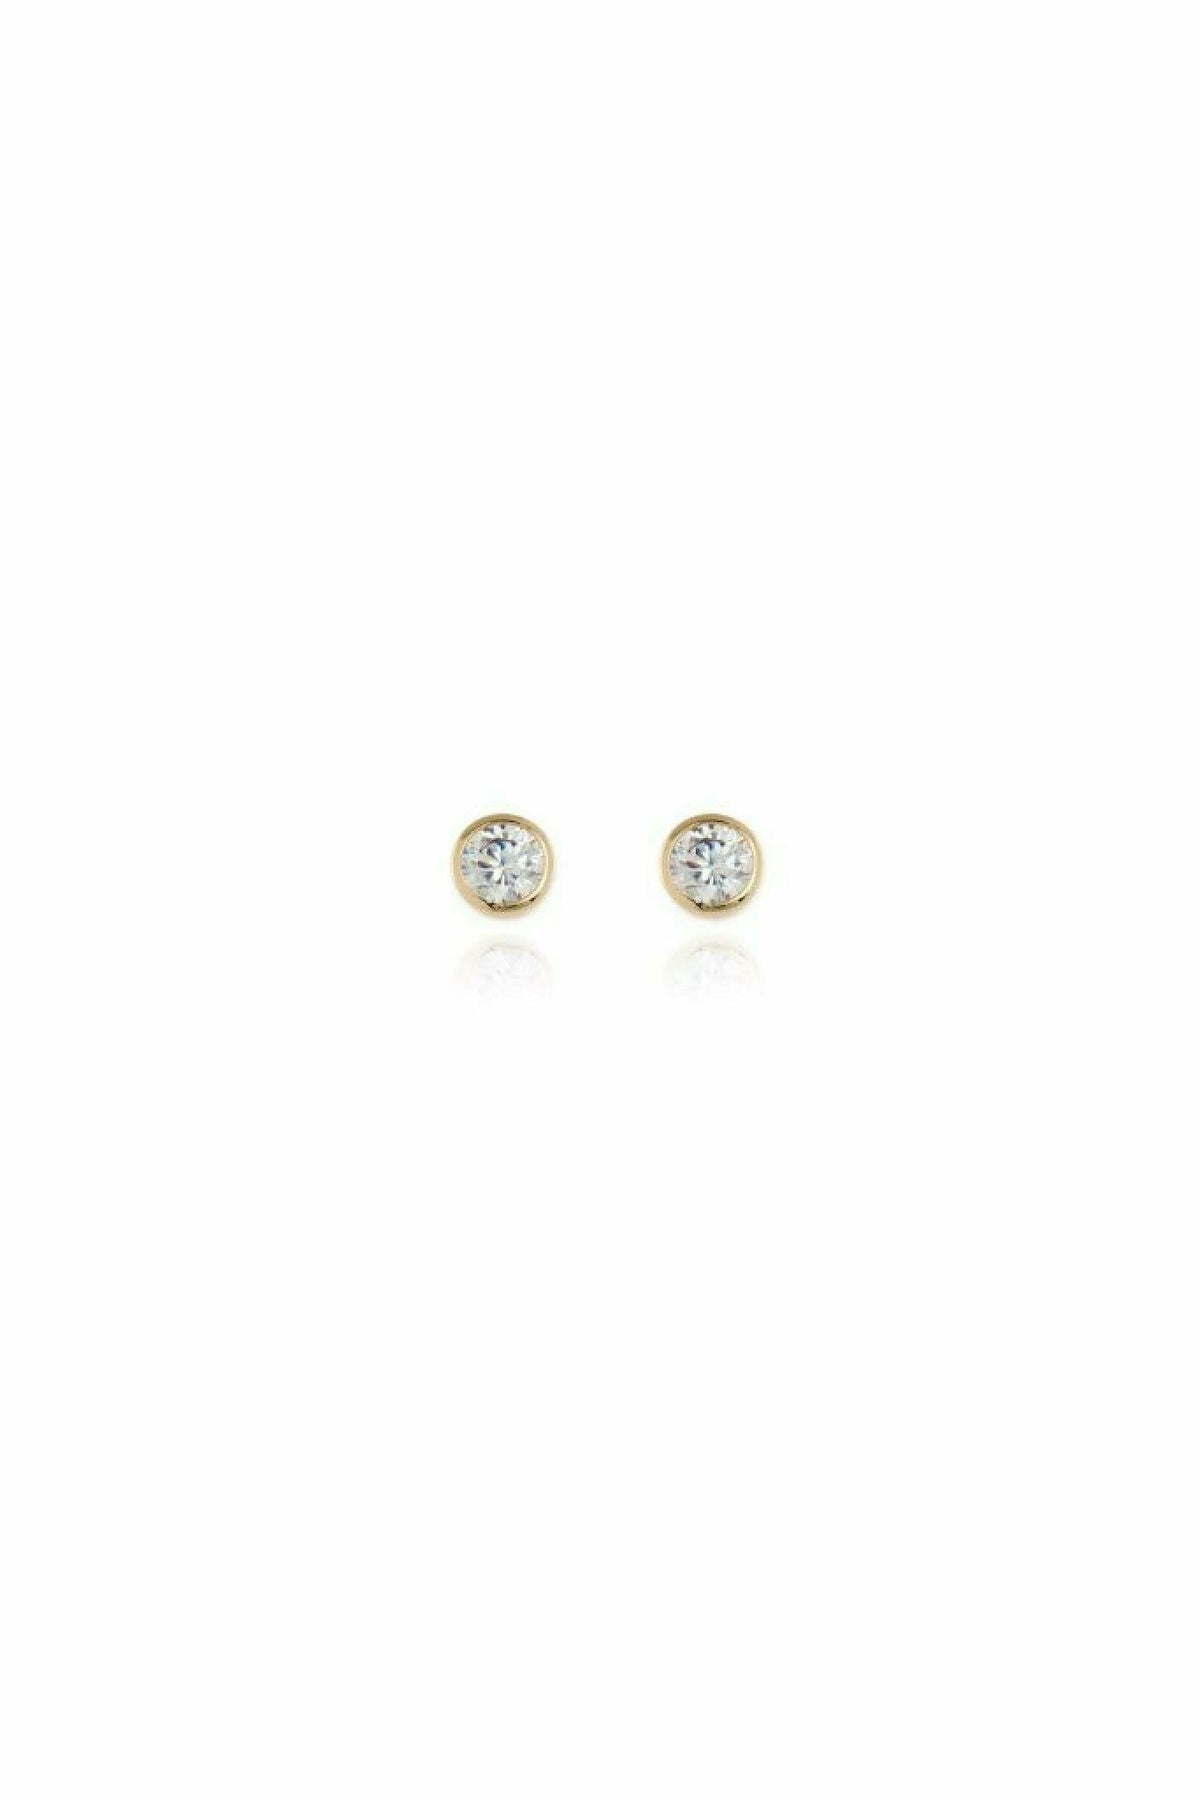 Hatu 0.7cm Earrings-Gold Cachet London